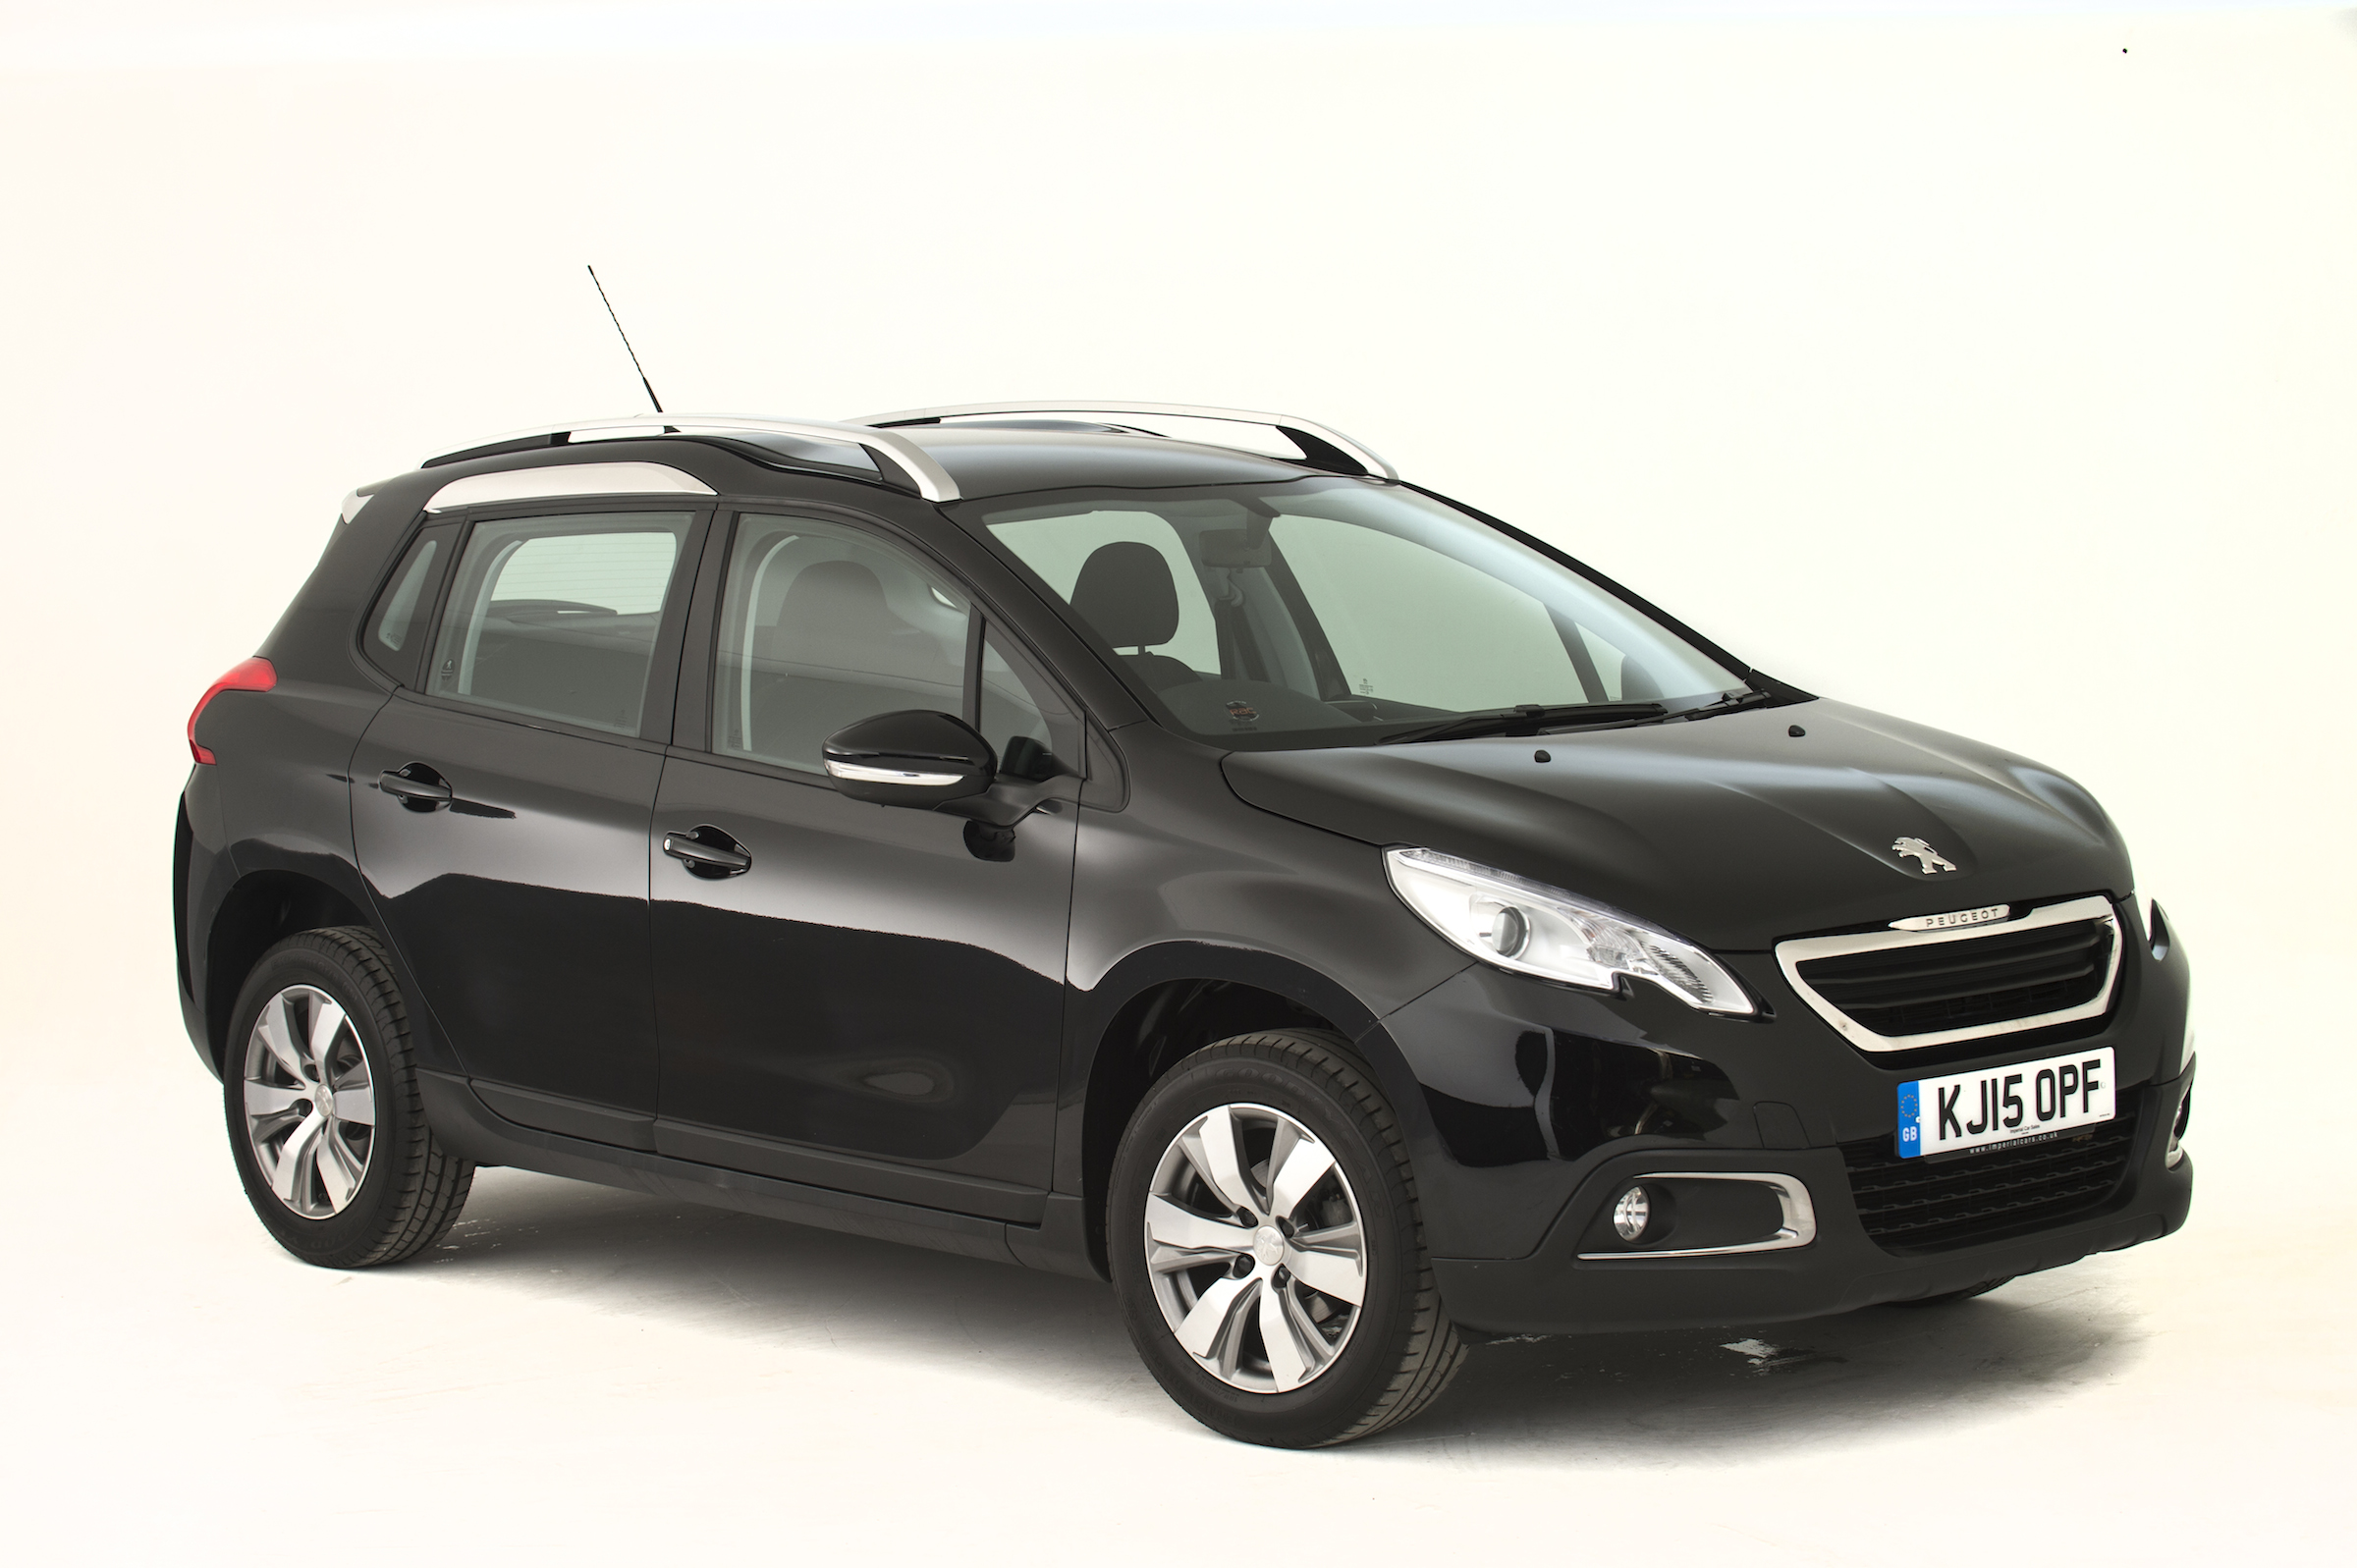 Peugeot 2008 (2013 - 2016) used car review, Car review